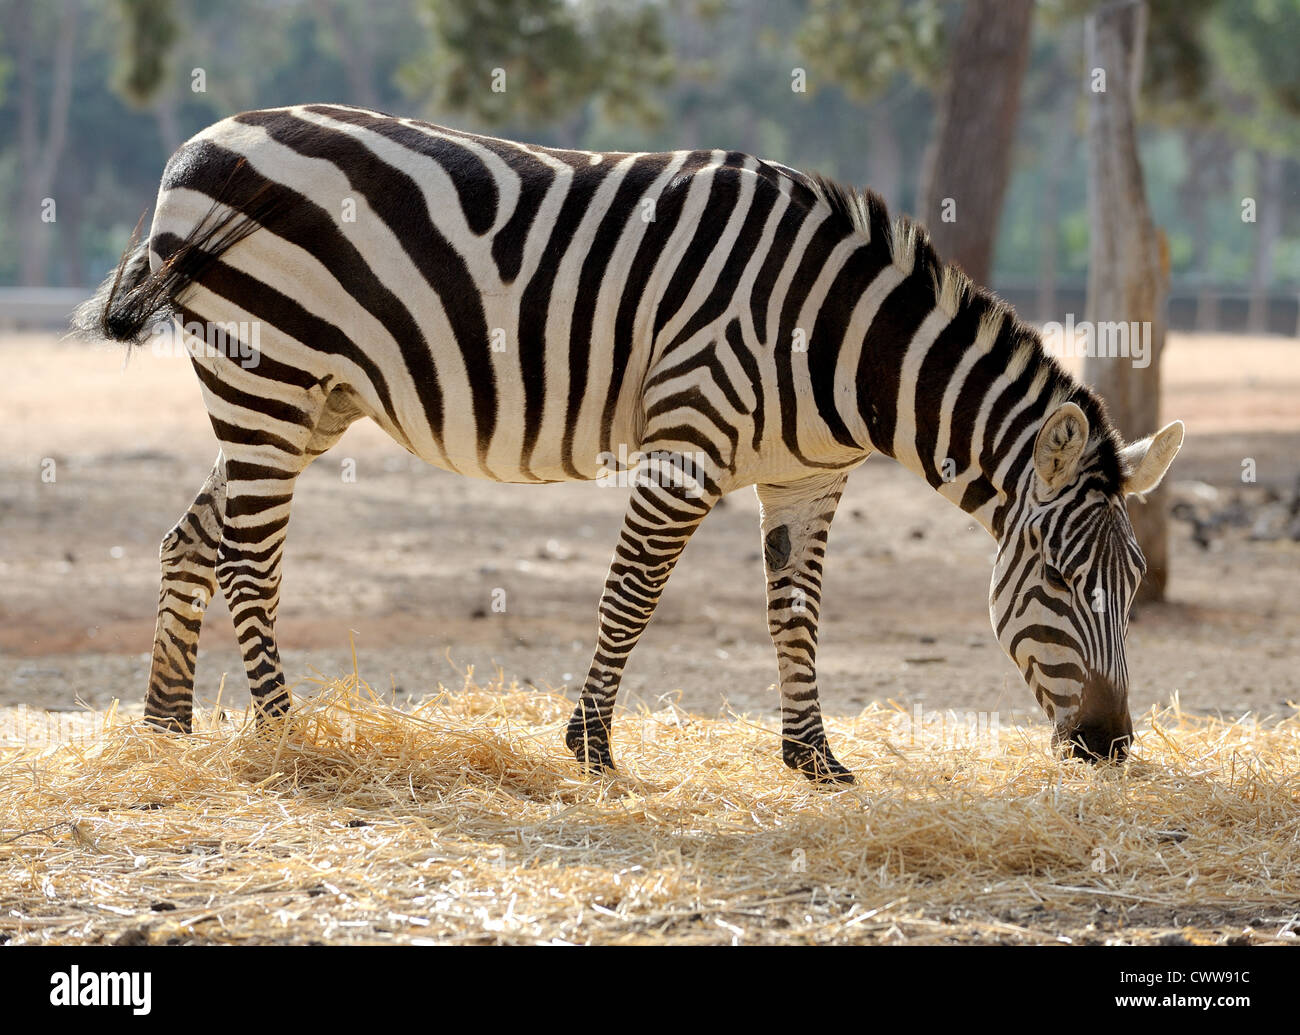 A strip of black, a strip of white - zebra in a zoo. Stock Photo